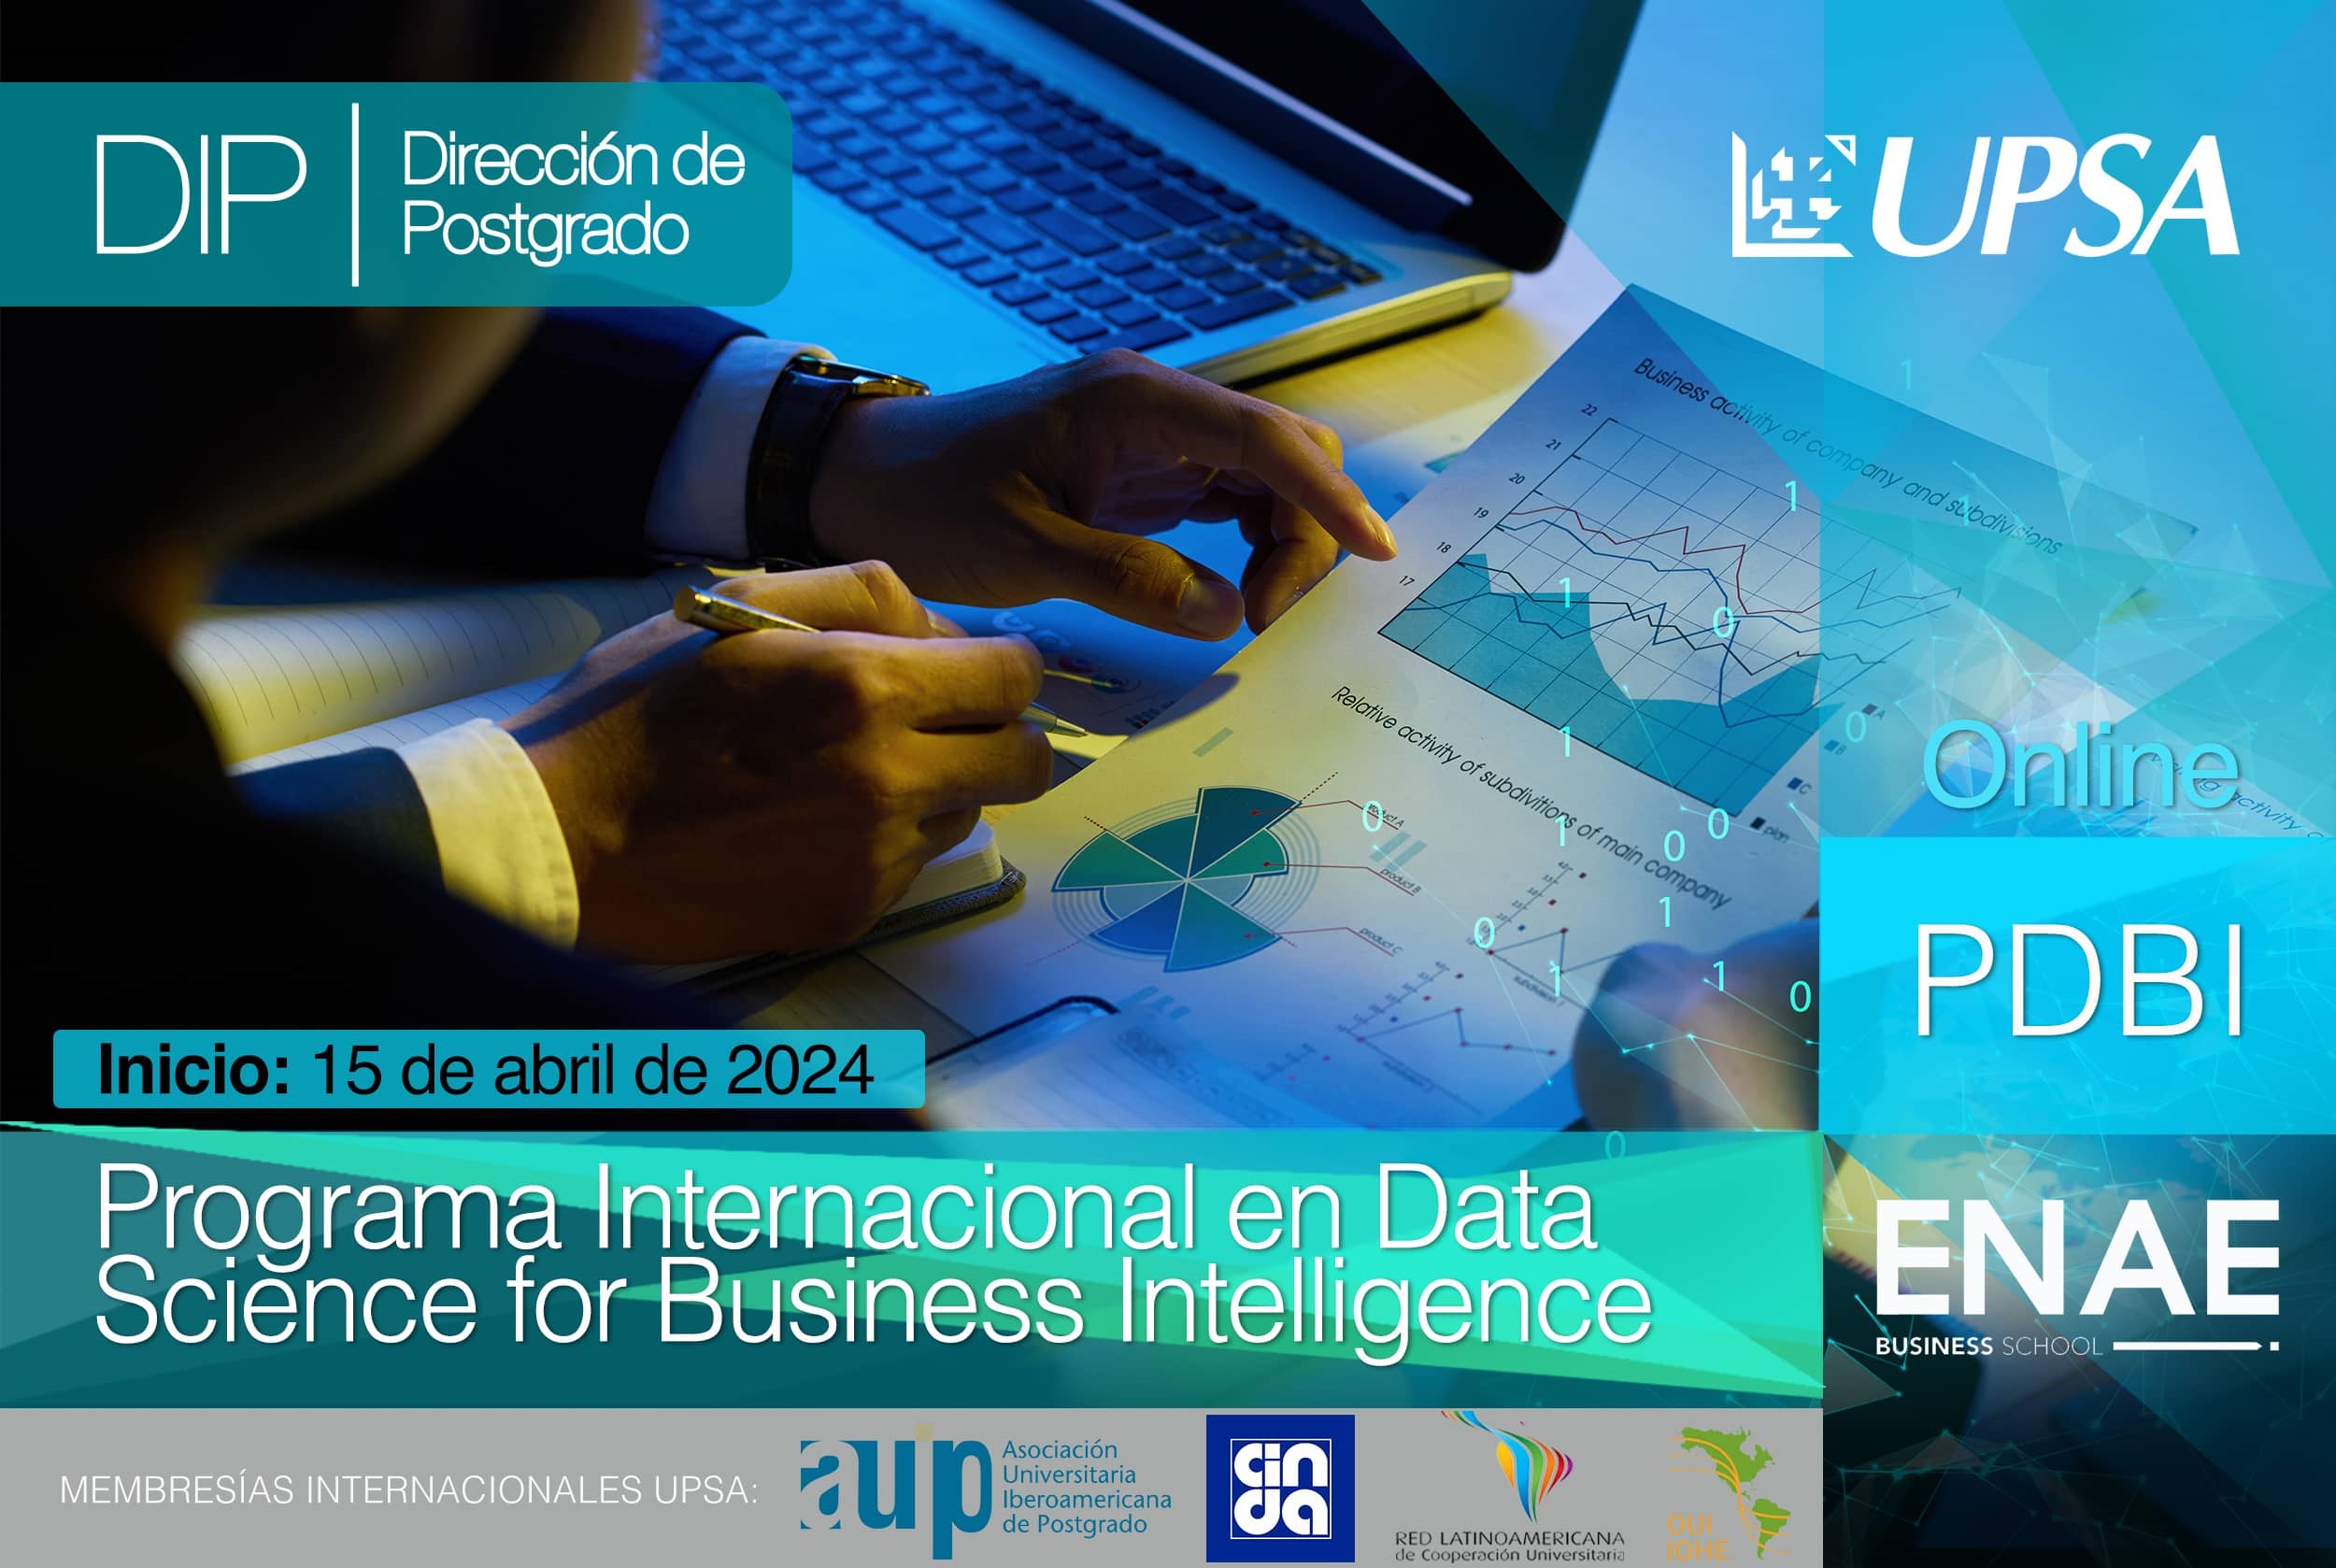 Programa Internacional en Data science for Business Intelligence (ENAE Business School UPSA)